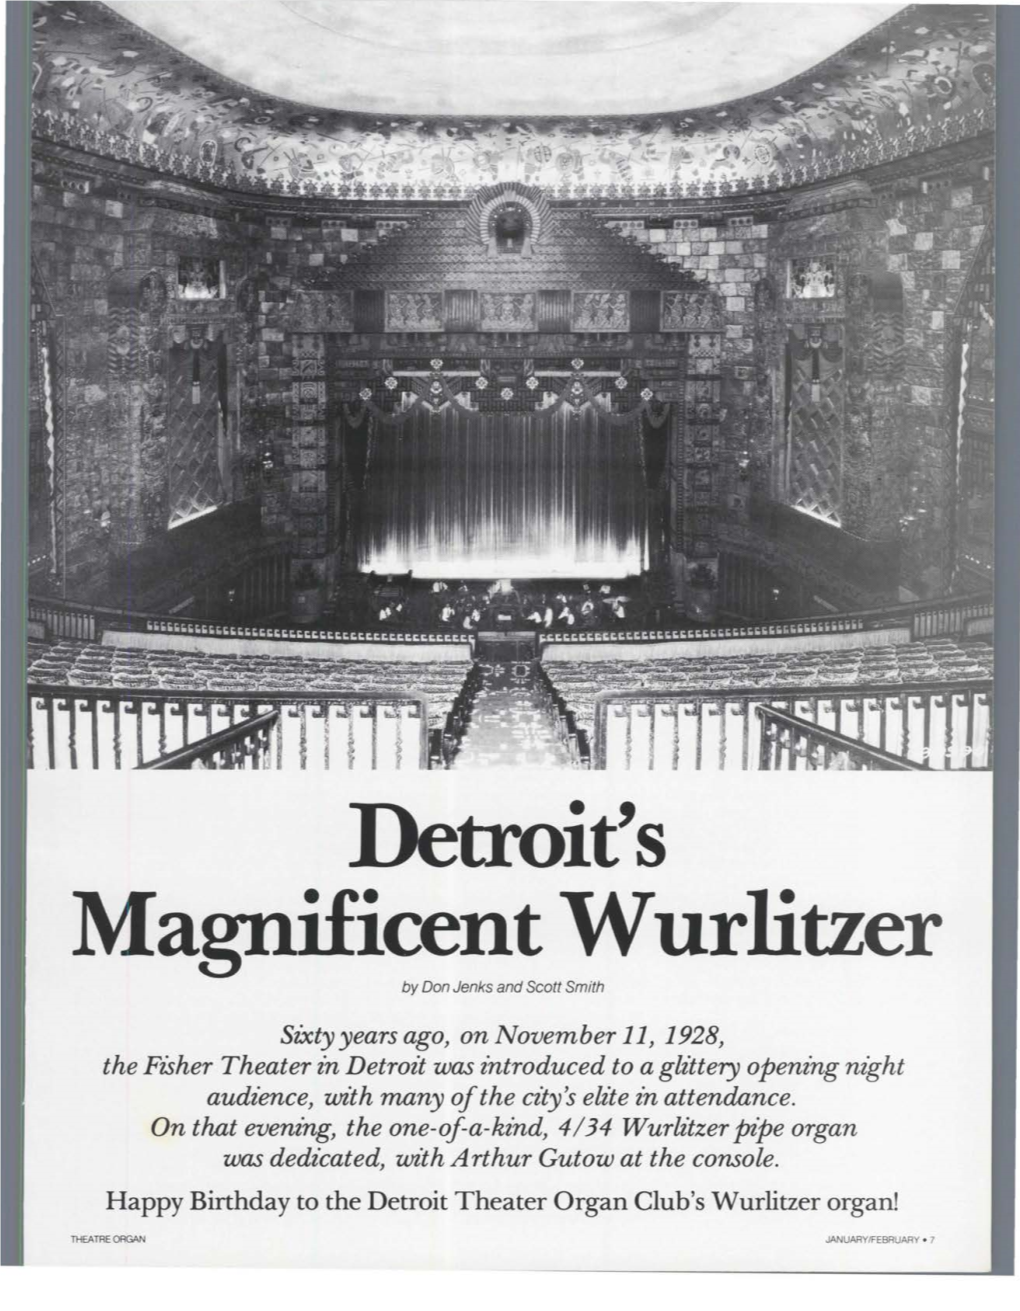 Detroit's Magnificent Wurlitzer